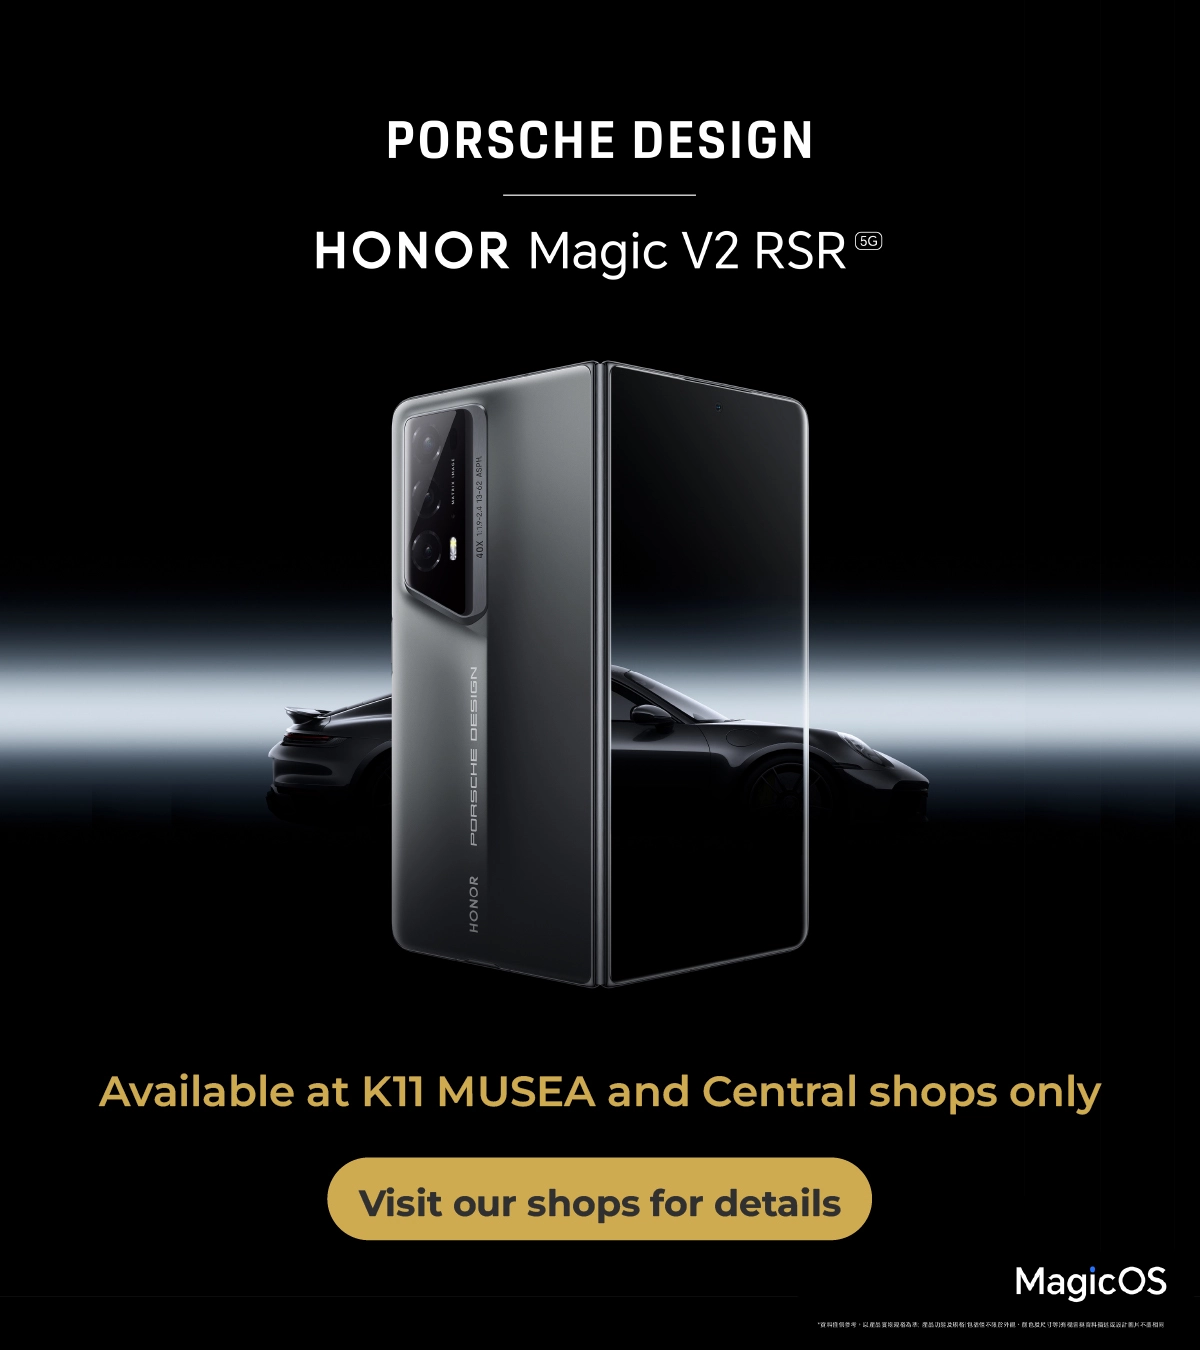 PORSCHE DESIGN HONOR Magic V2 RSR. Available at K11 MUSEA and Central shops only. Visit our shops for details.